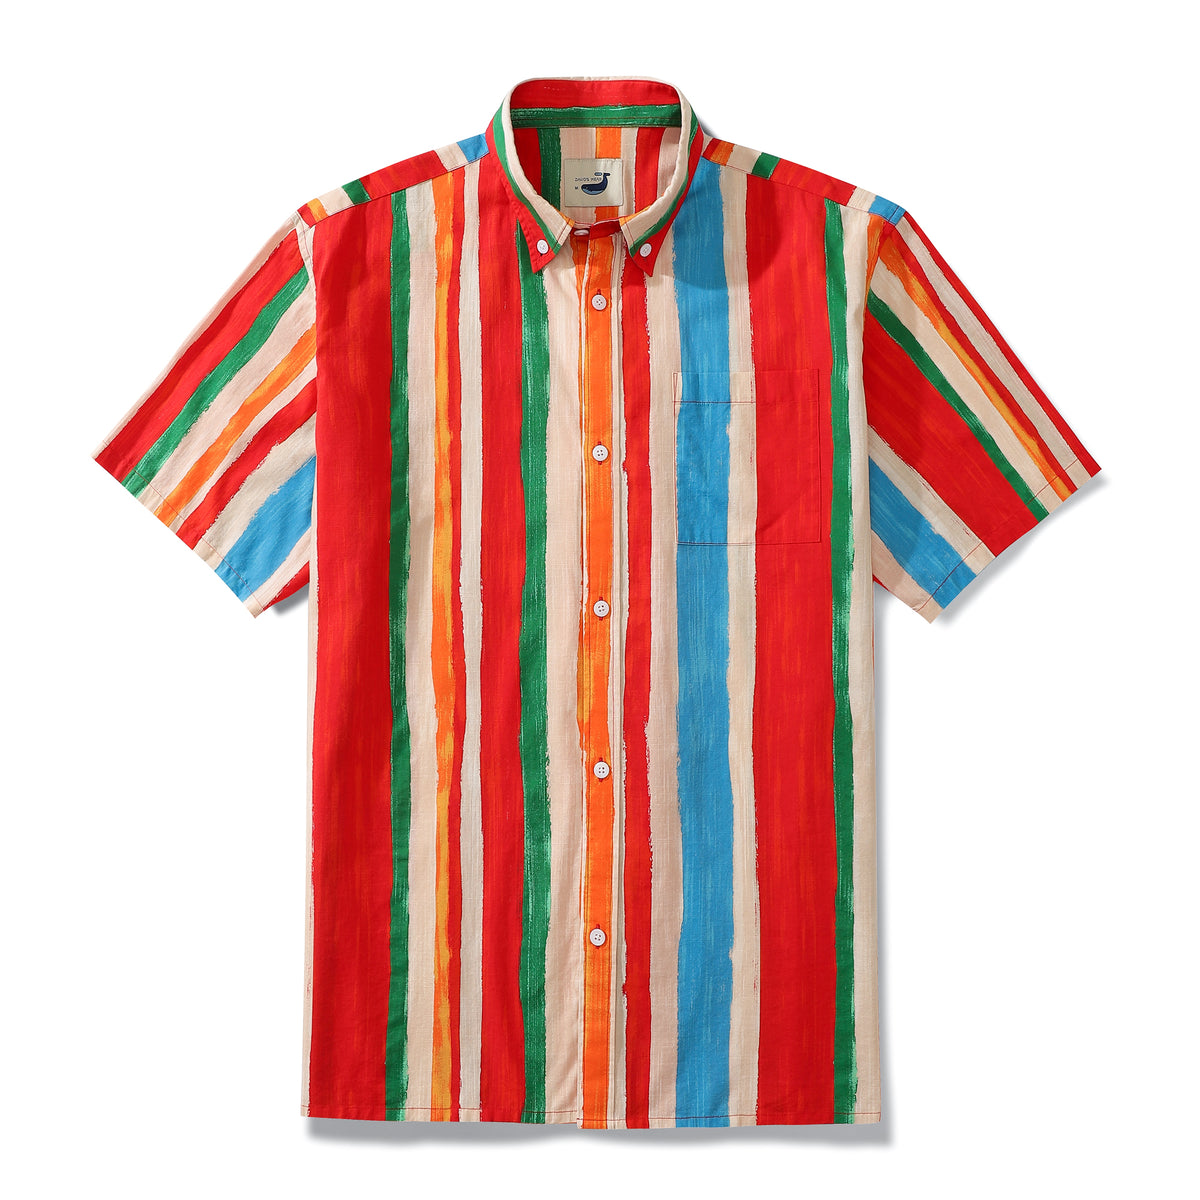 Men's Aloha Shirt Colorful Stripe Pattern Cotton Short Sleeve Button D ...